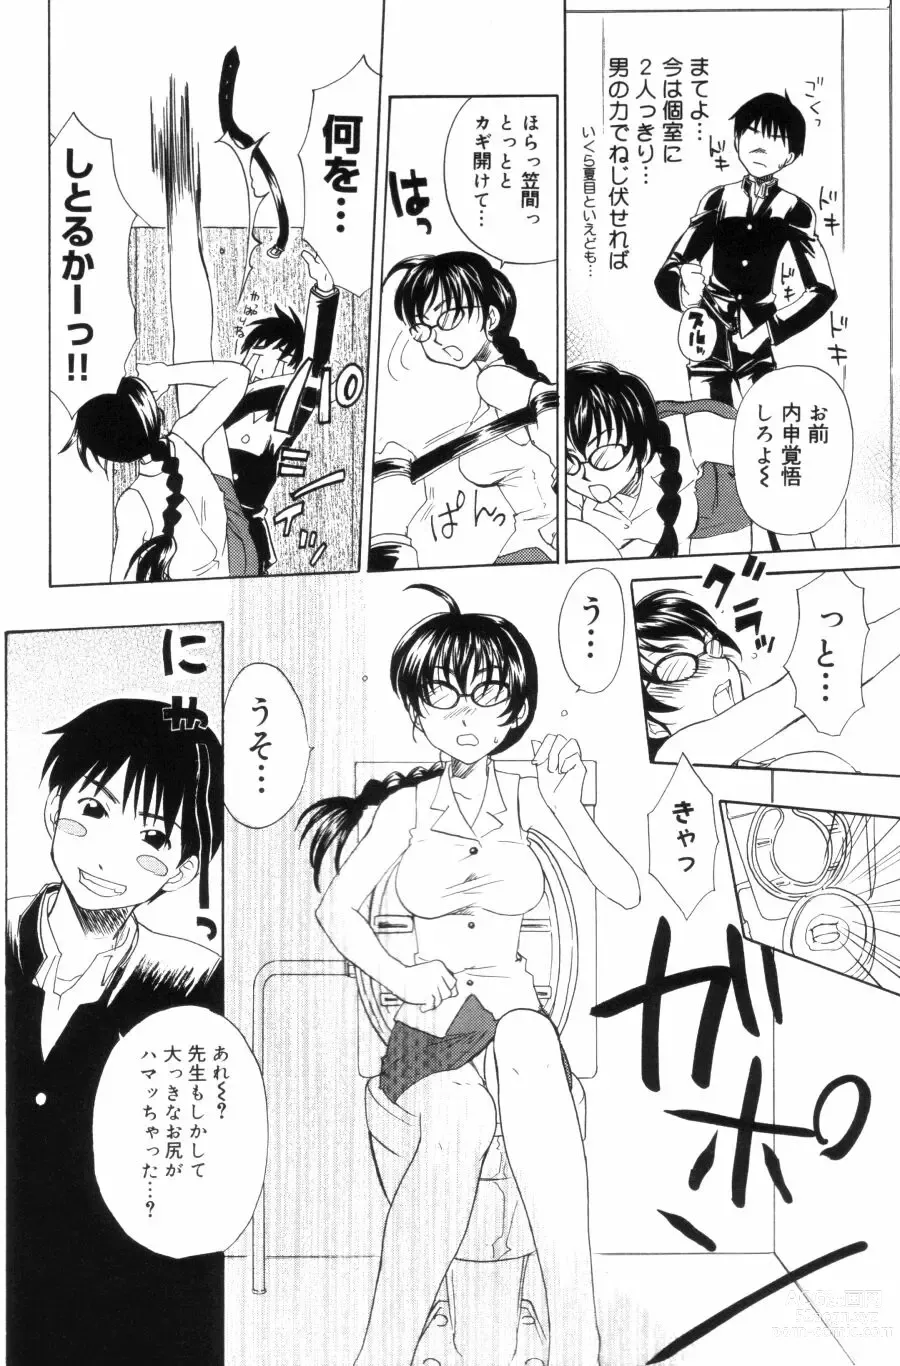 Page 152 of manga OL Frustrations